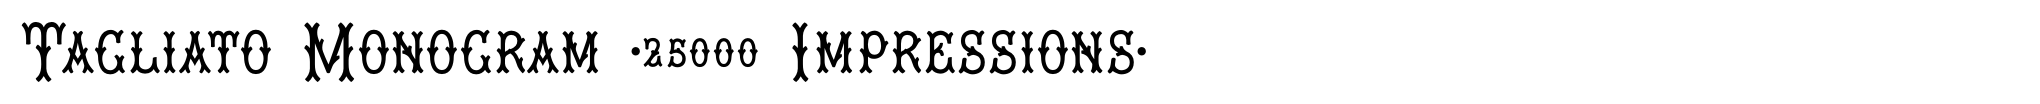 Tagliato Monogram (25000 Impressions) image